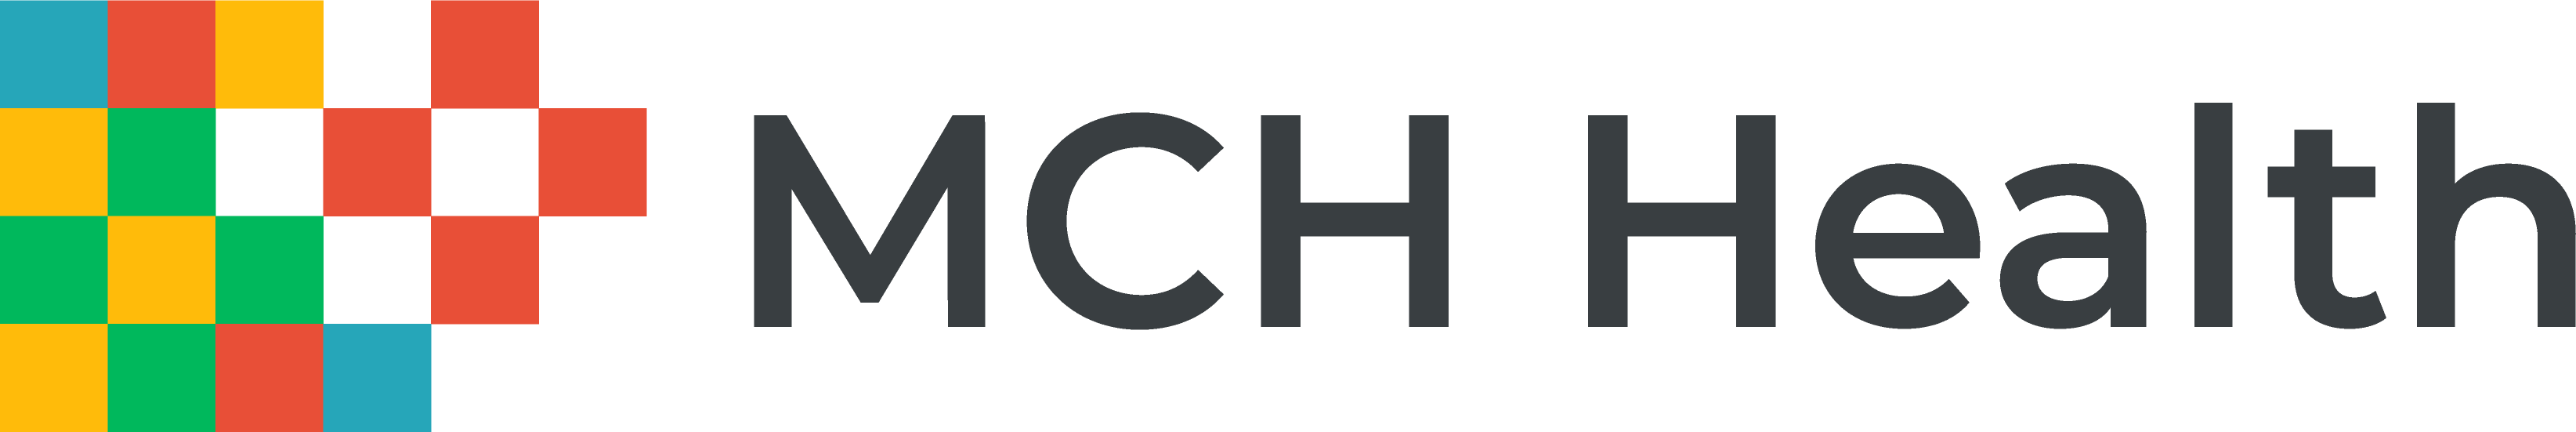 mchhealth-logo-full-color-rgb